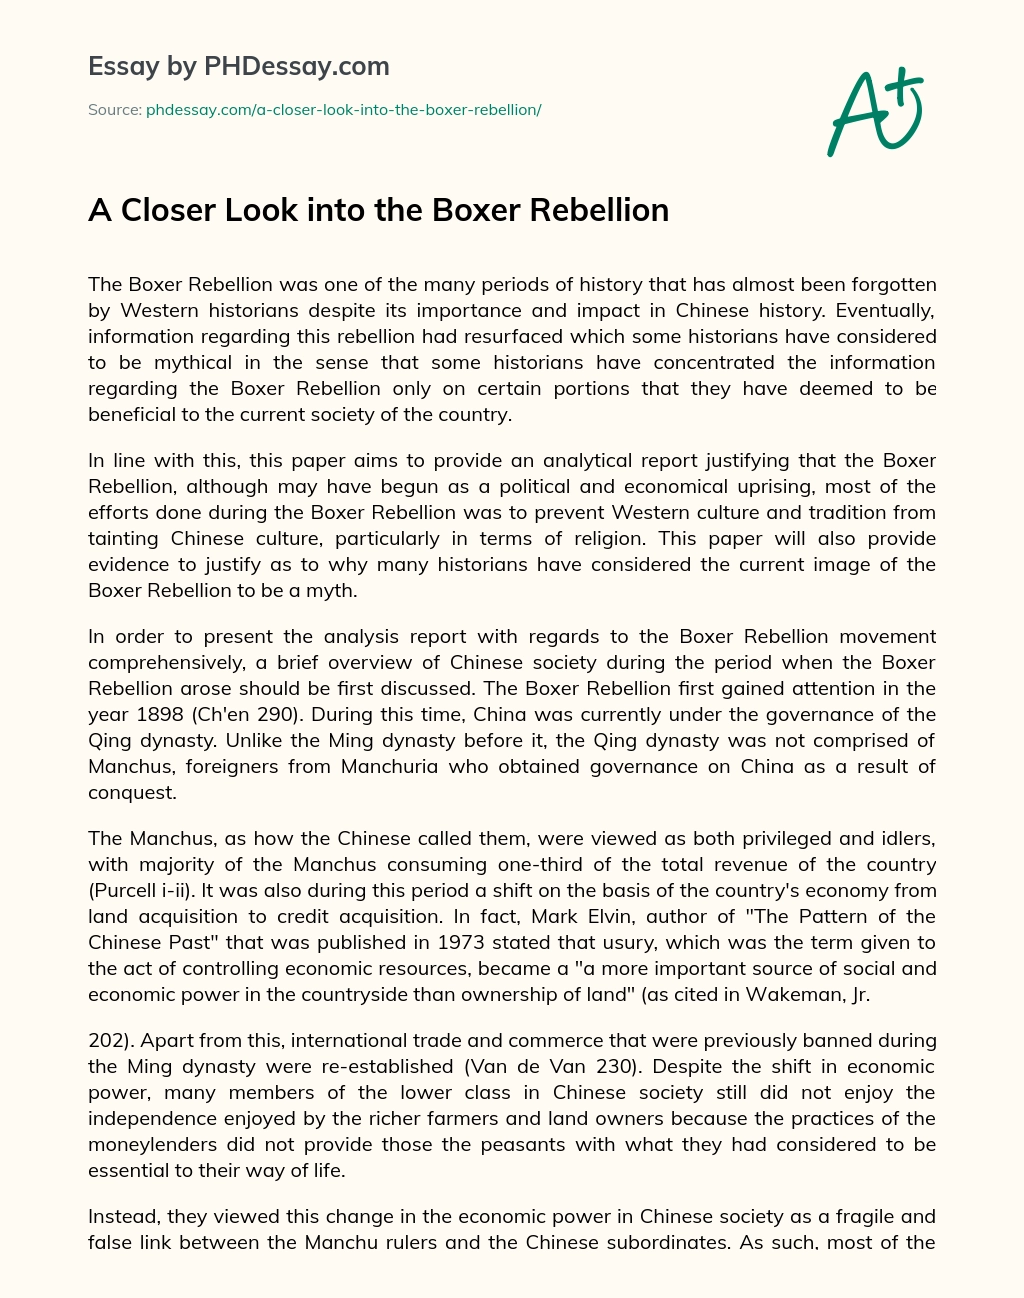 A Closer Look into the Boxer Rebellion essay